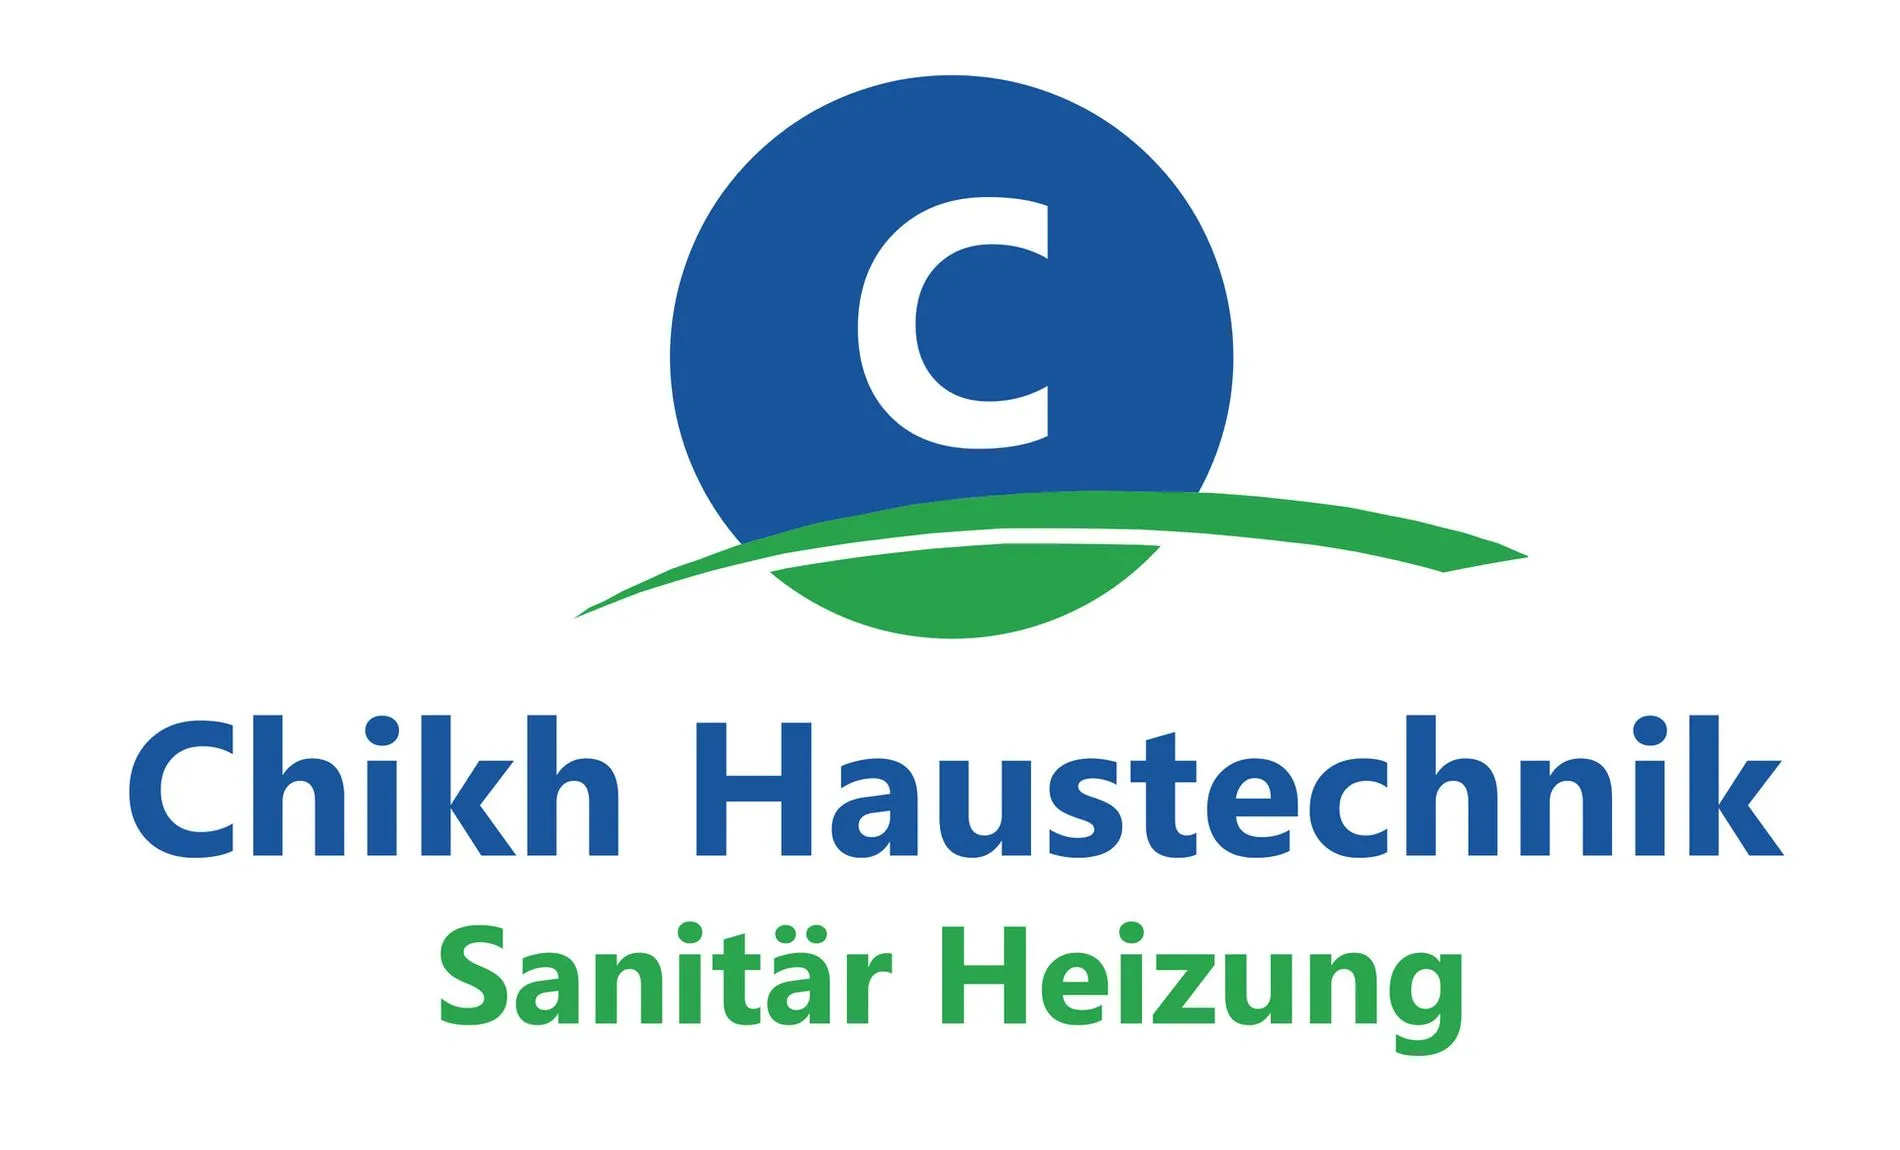 Chikh-Haustechnik.png